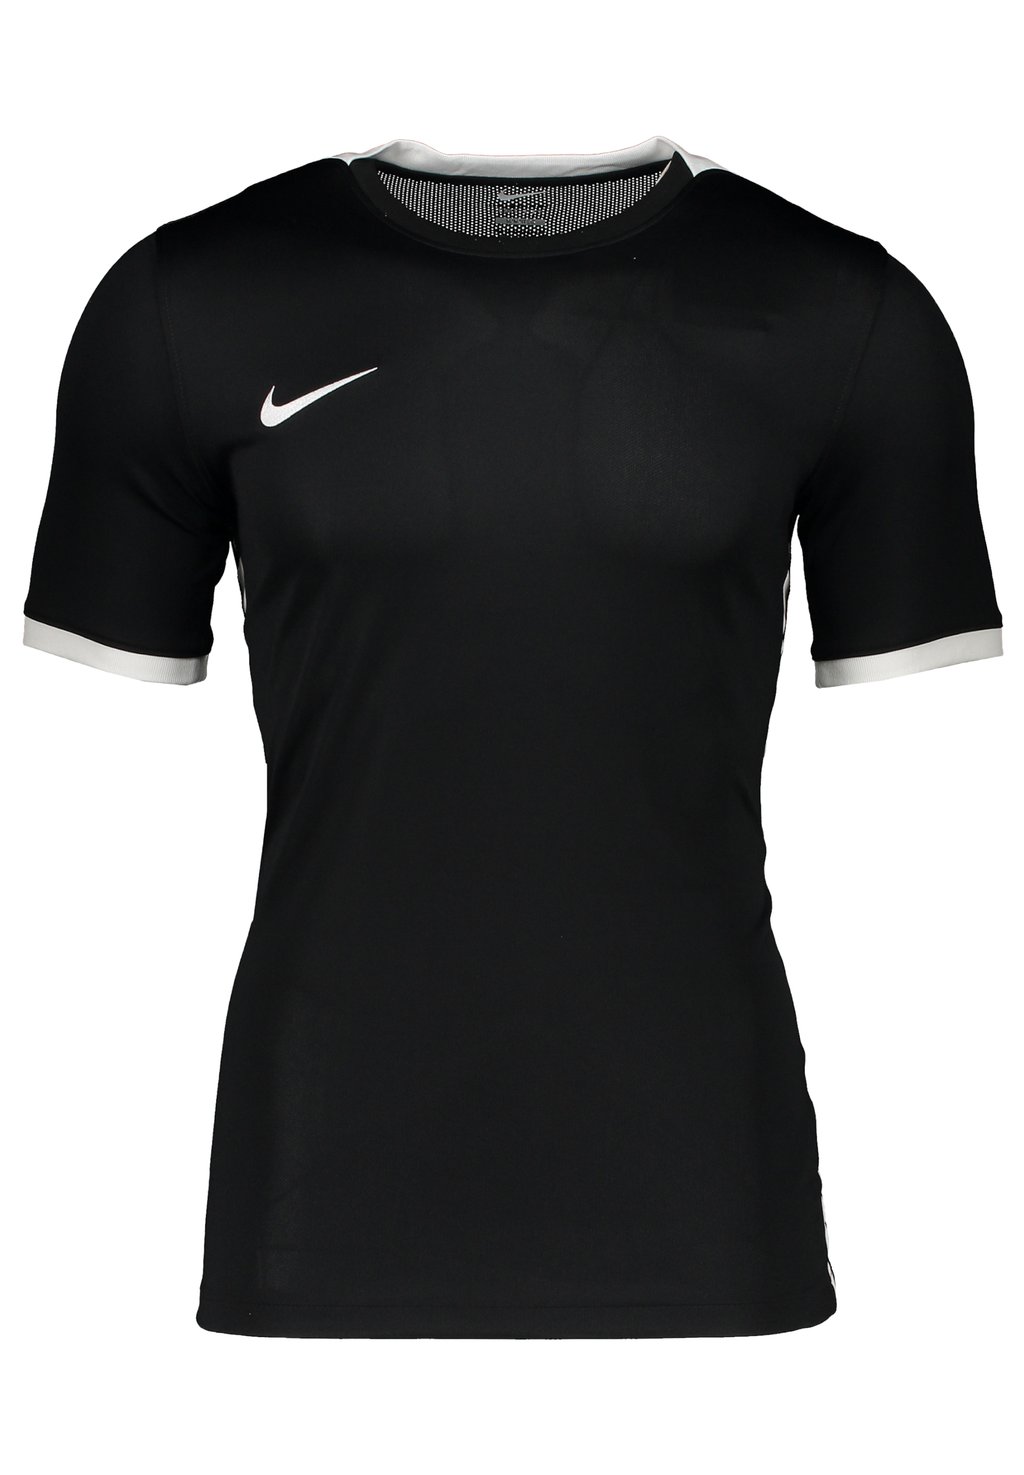 Футболка базовая TEAMSPORT Nike, цвет schwarzweiss футболка базовая teamsport nike цвет weissschwarz